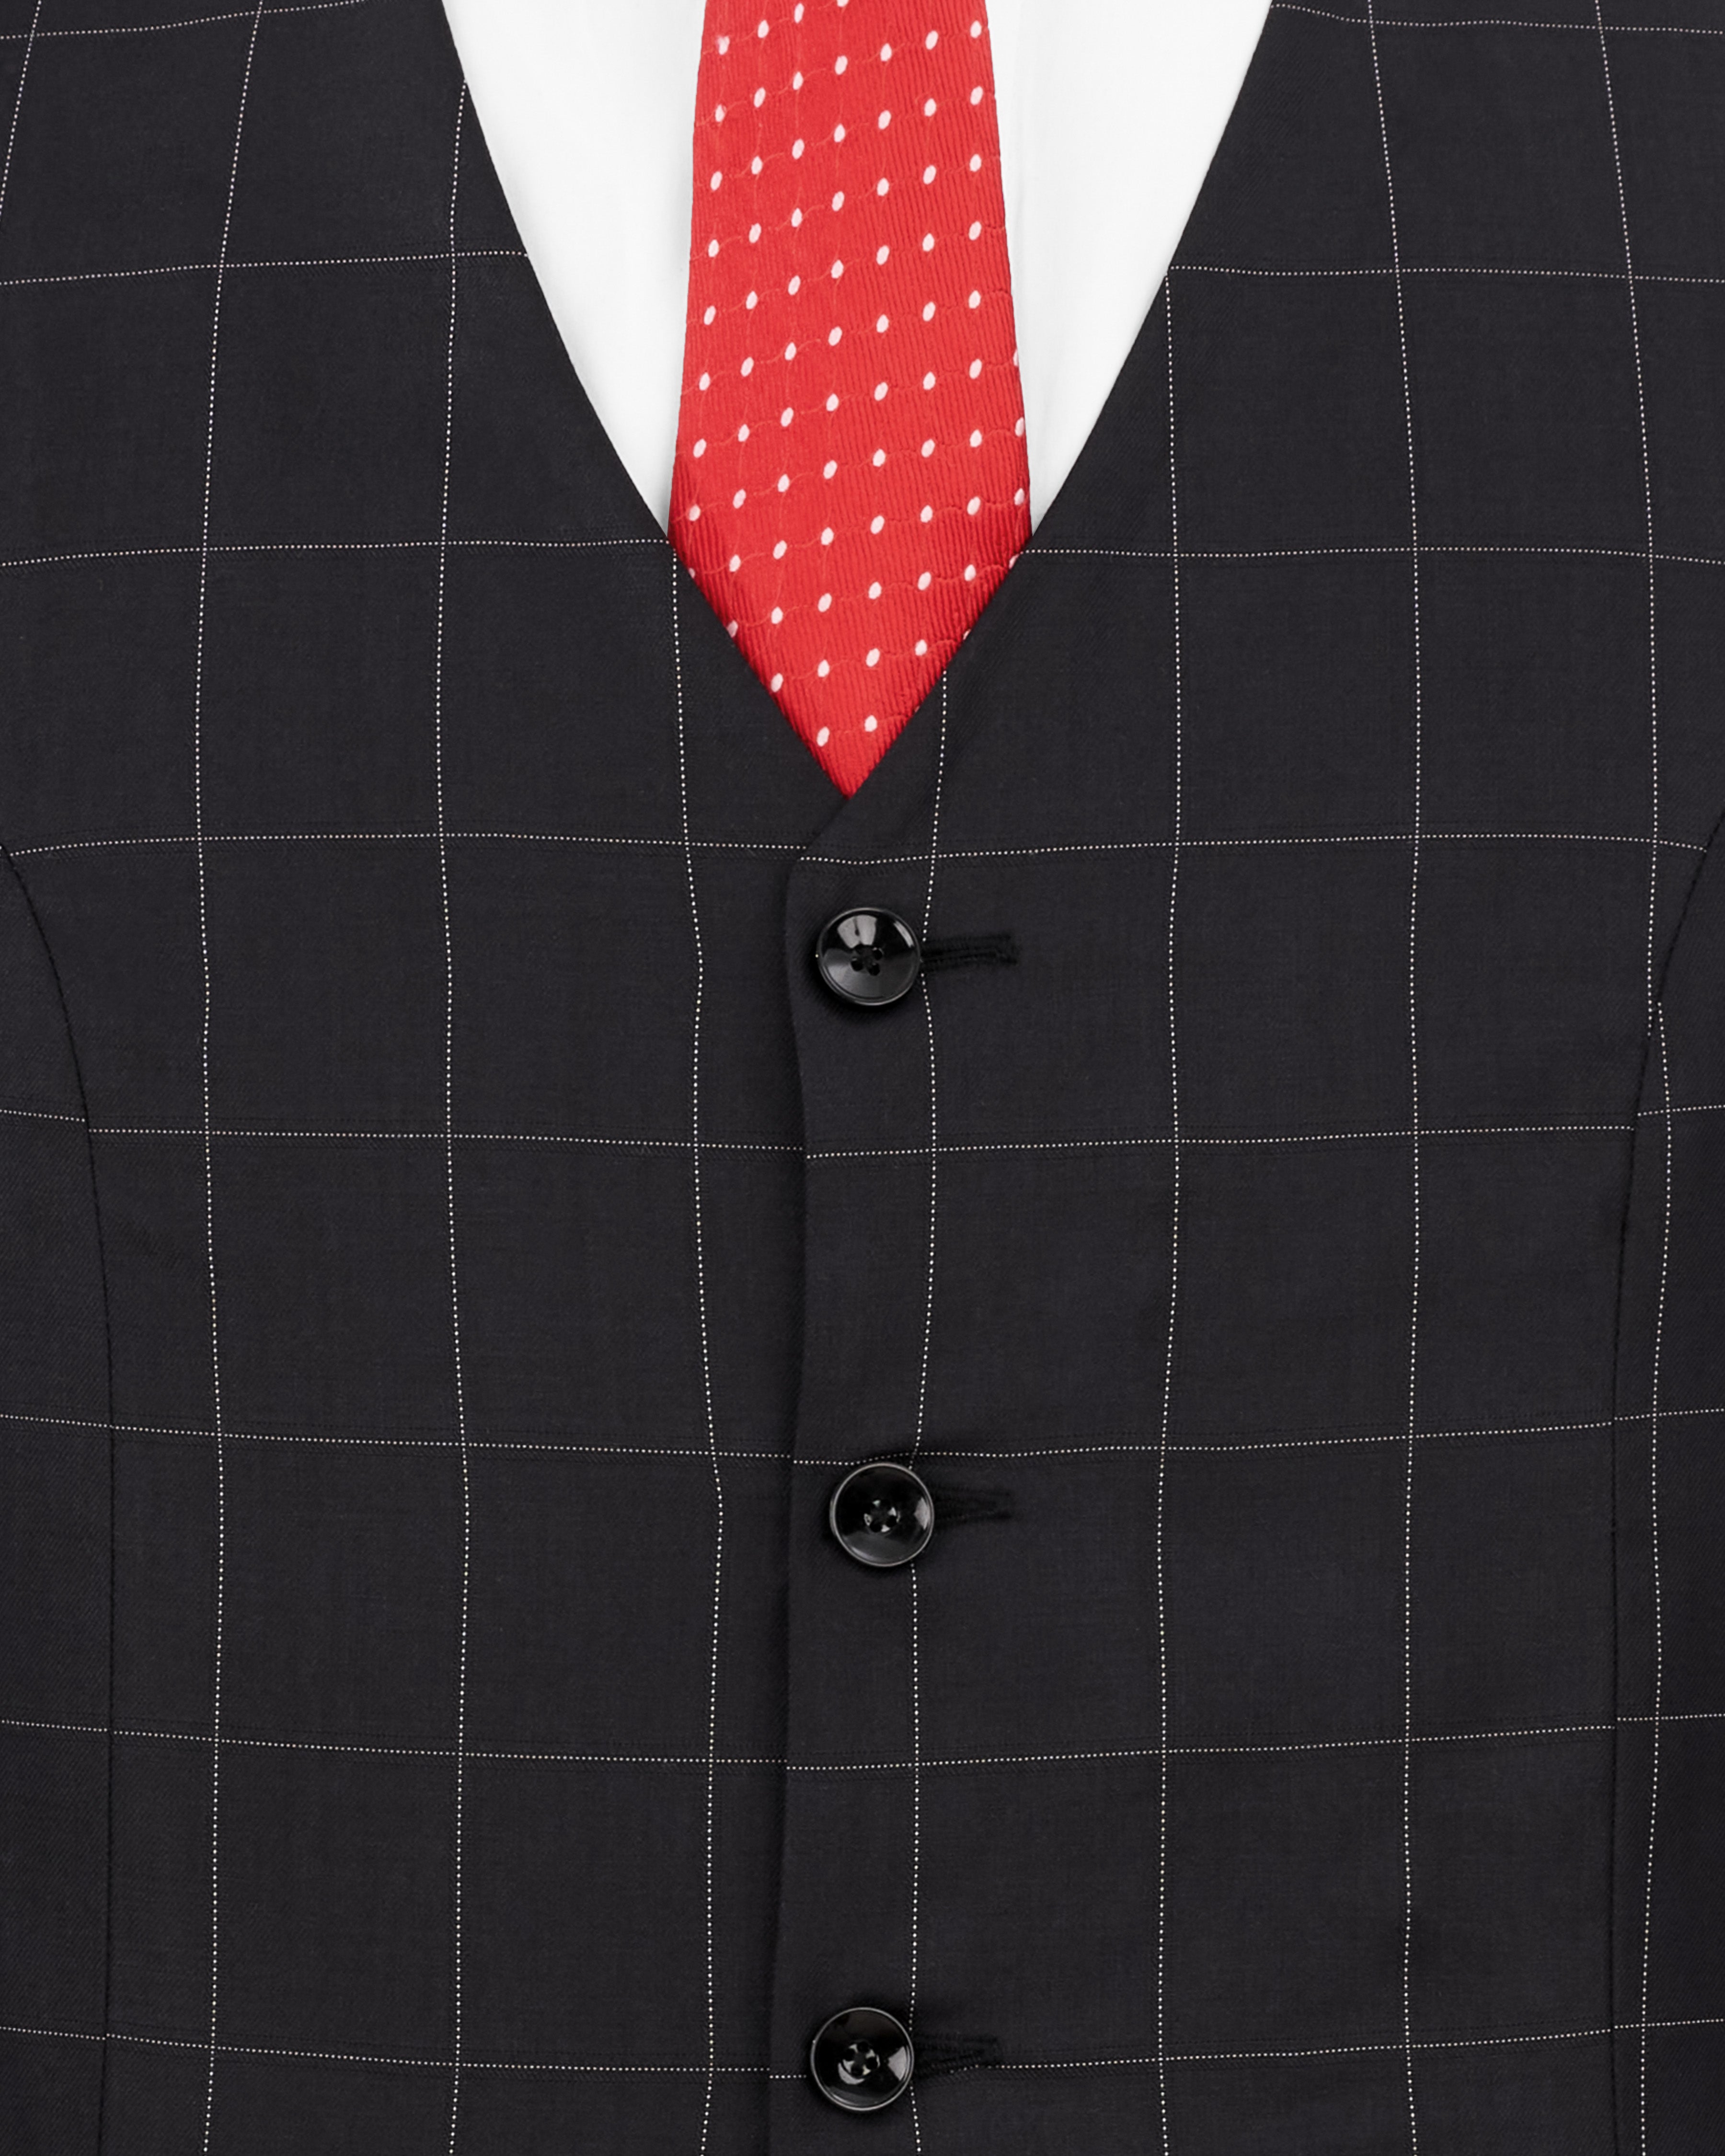 Napoli Slim Fit Black Subtle Maroon White Speckle Plaid Half Canvassed Wool  Suit | The Suit Depot